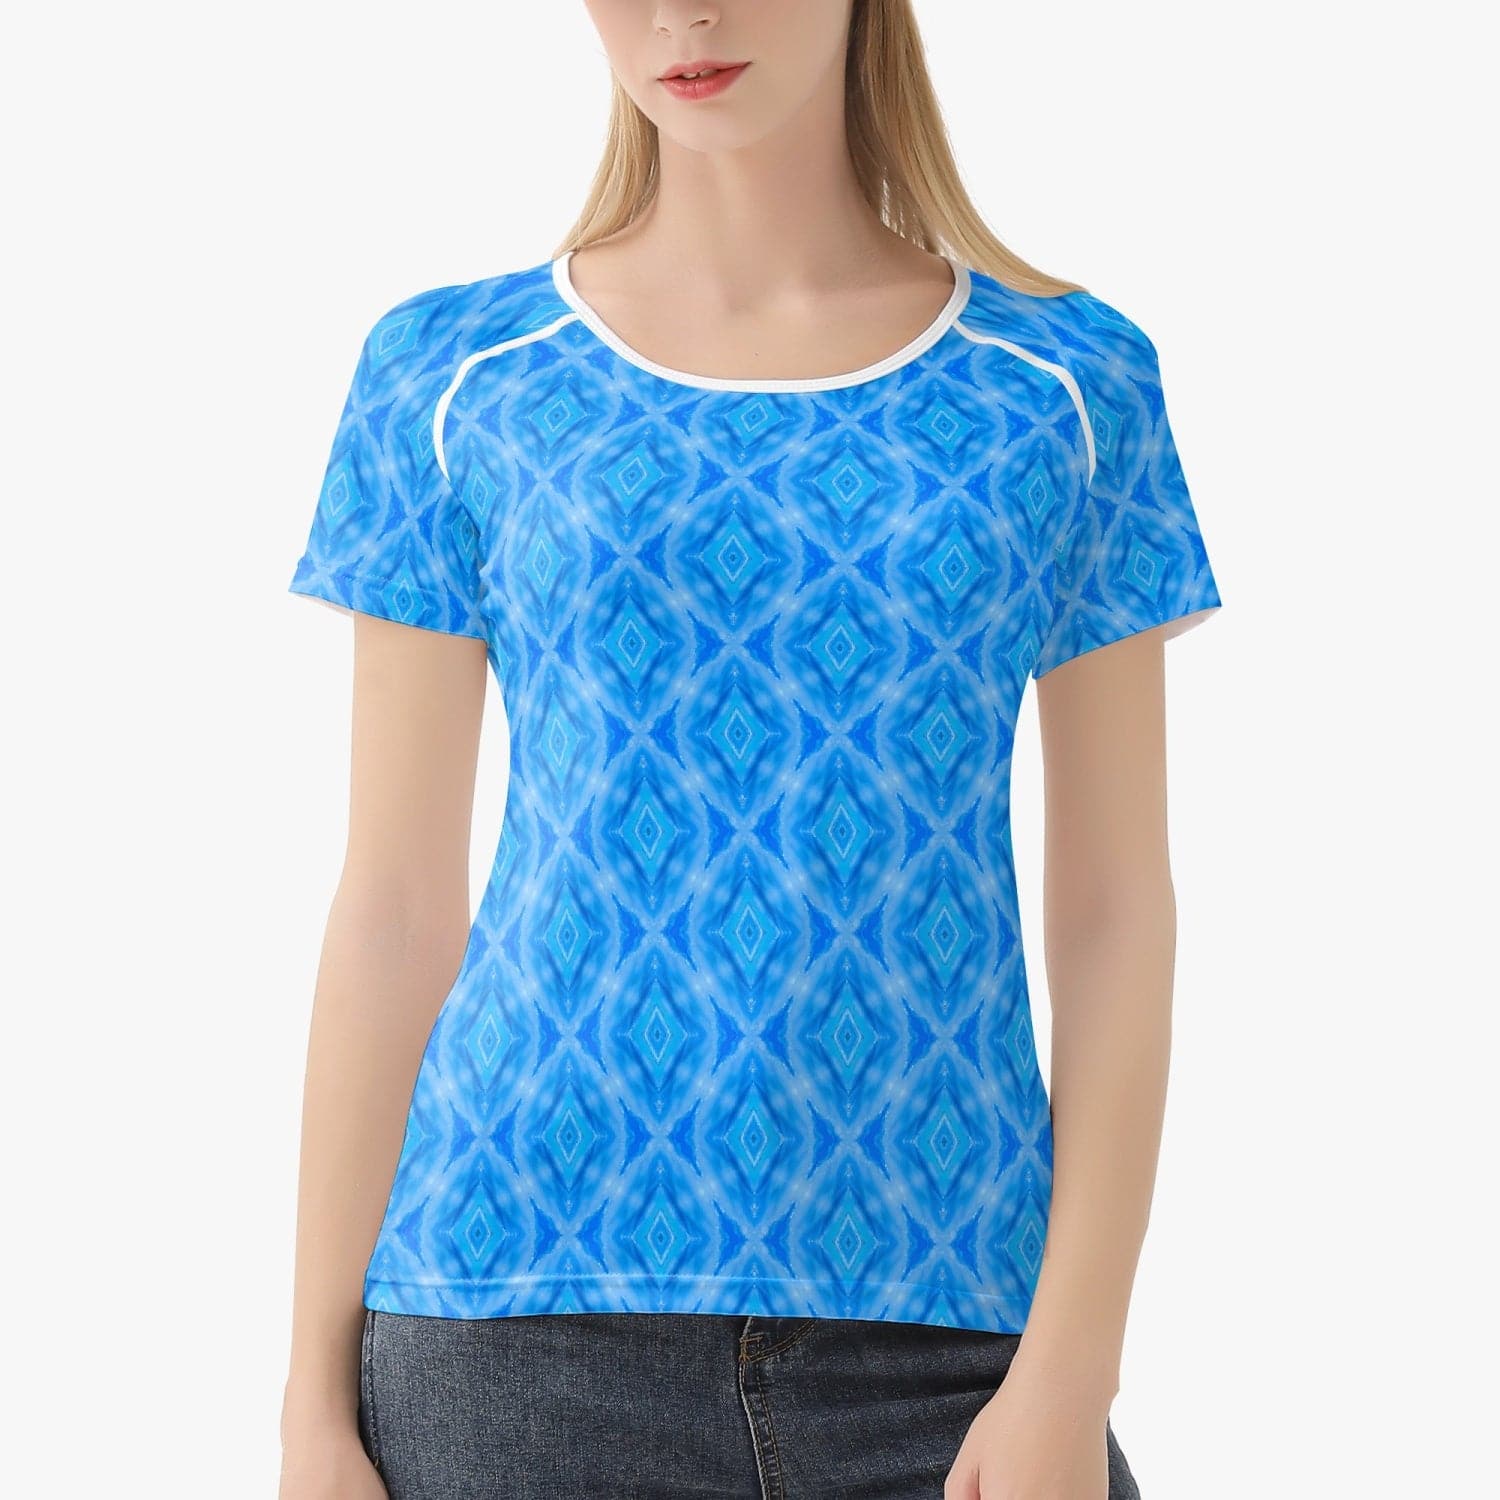 Blue Air Throat Chacra Handmade Yoga Top for  Women sports T-shirt, by Sensus Studio Design